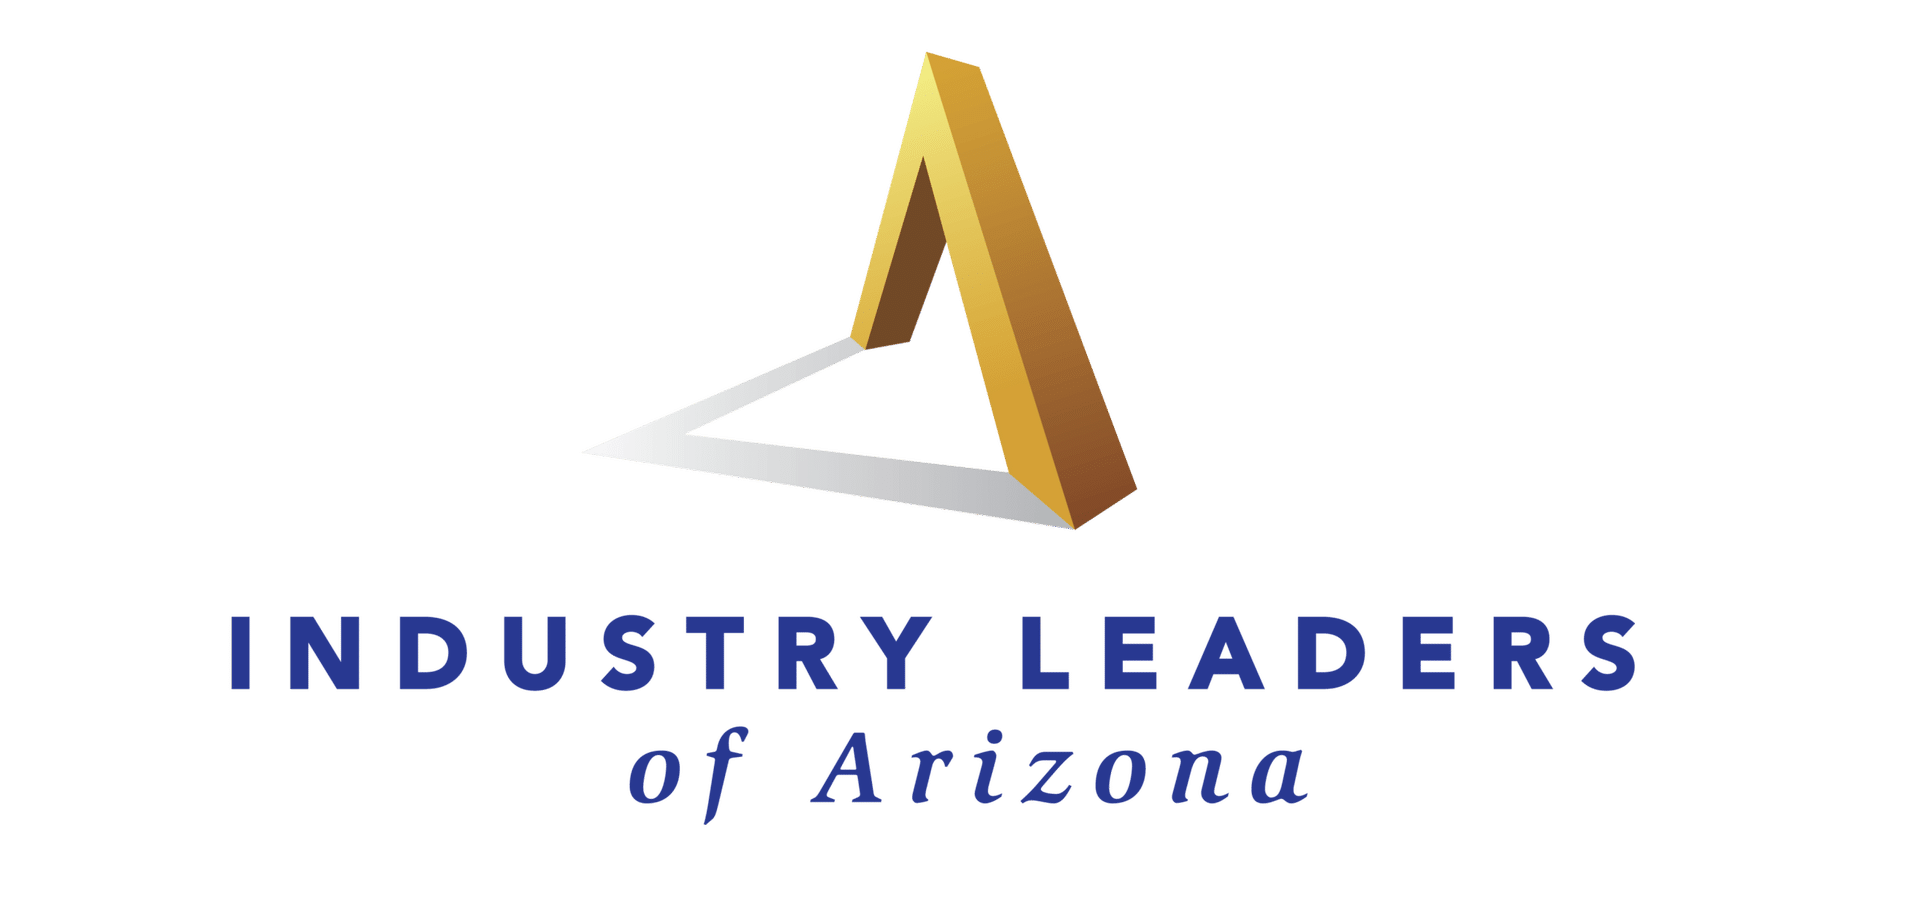 Industry Leads of Arizona logo